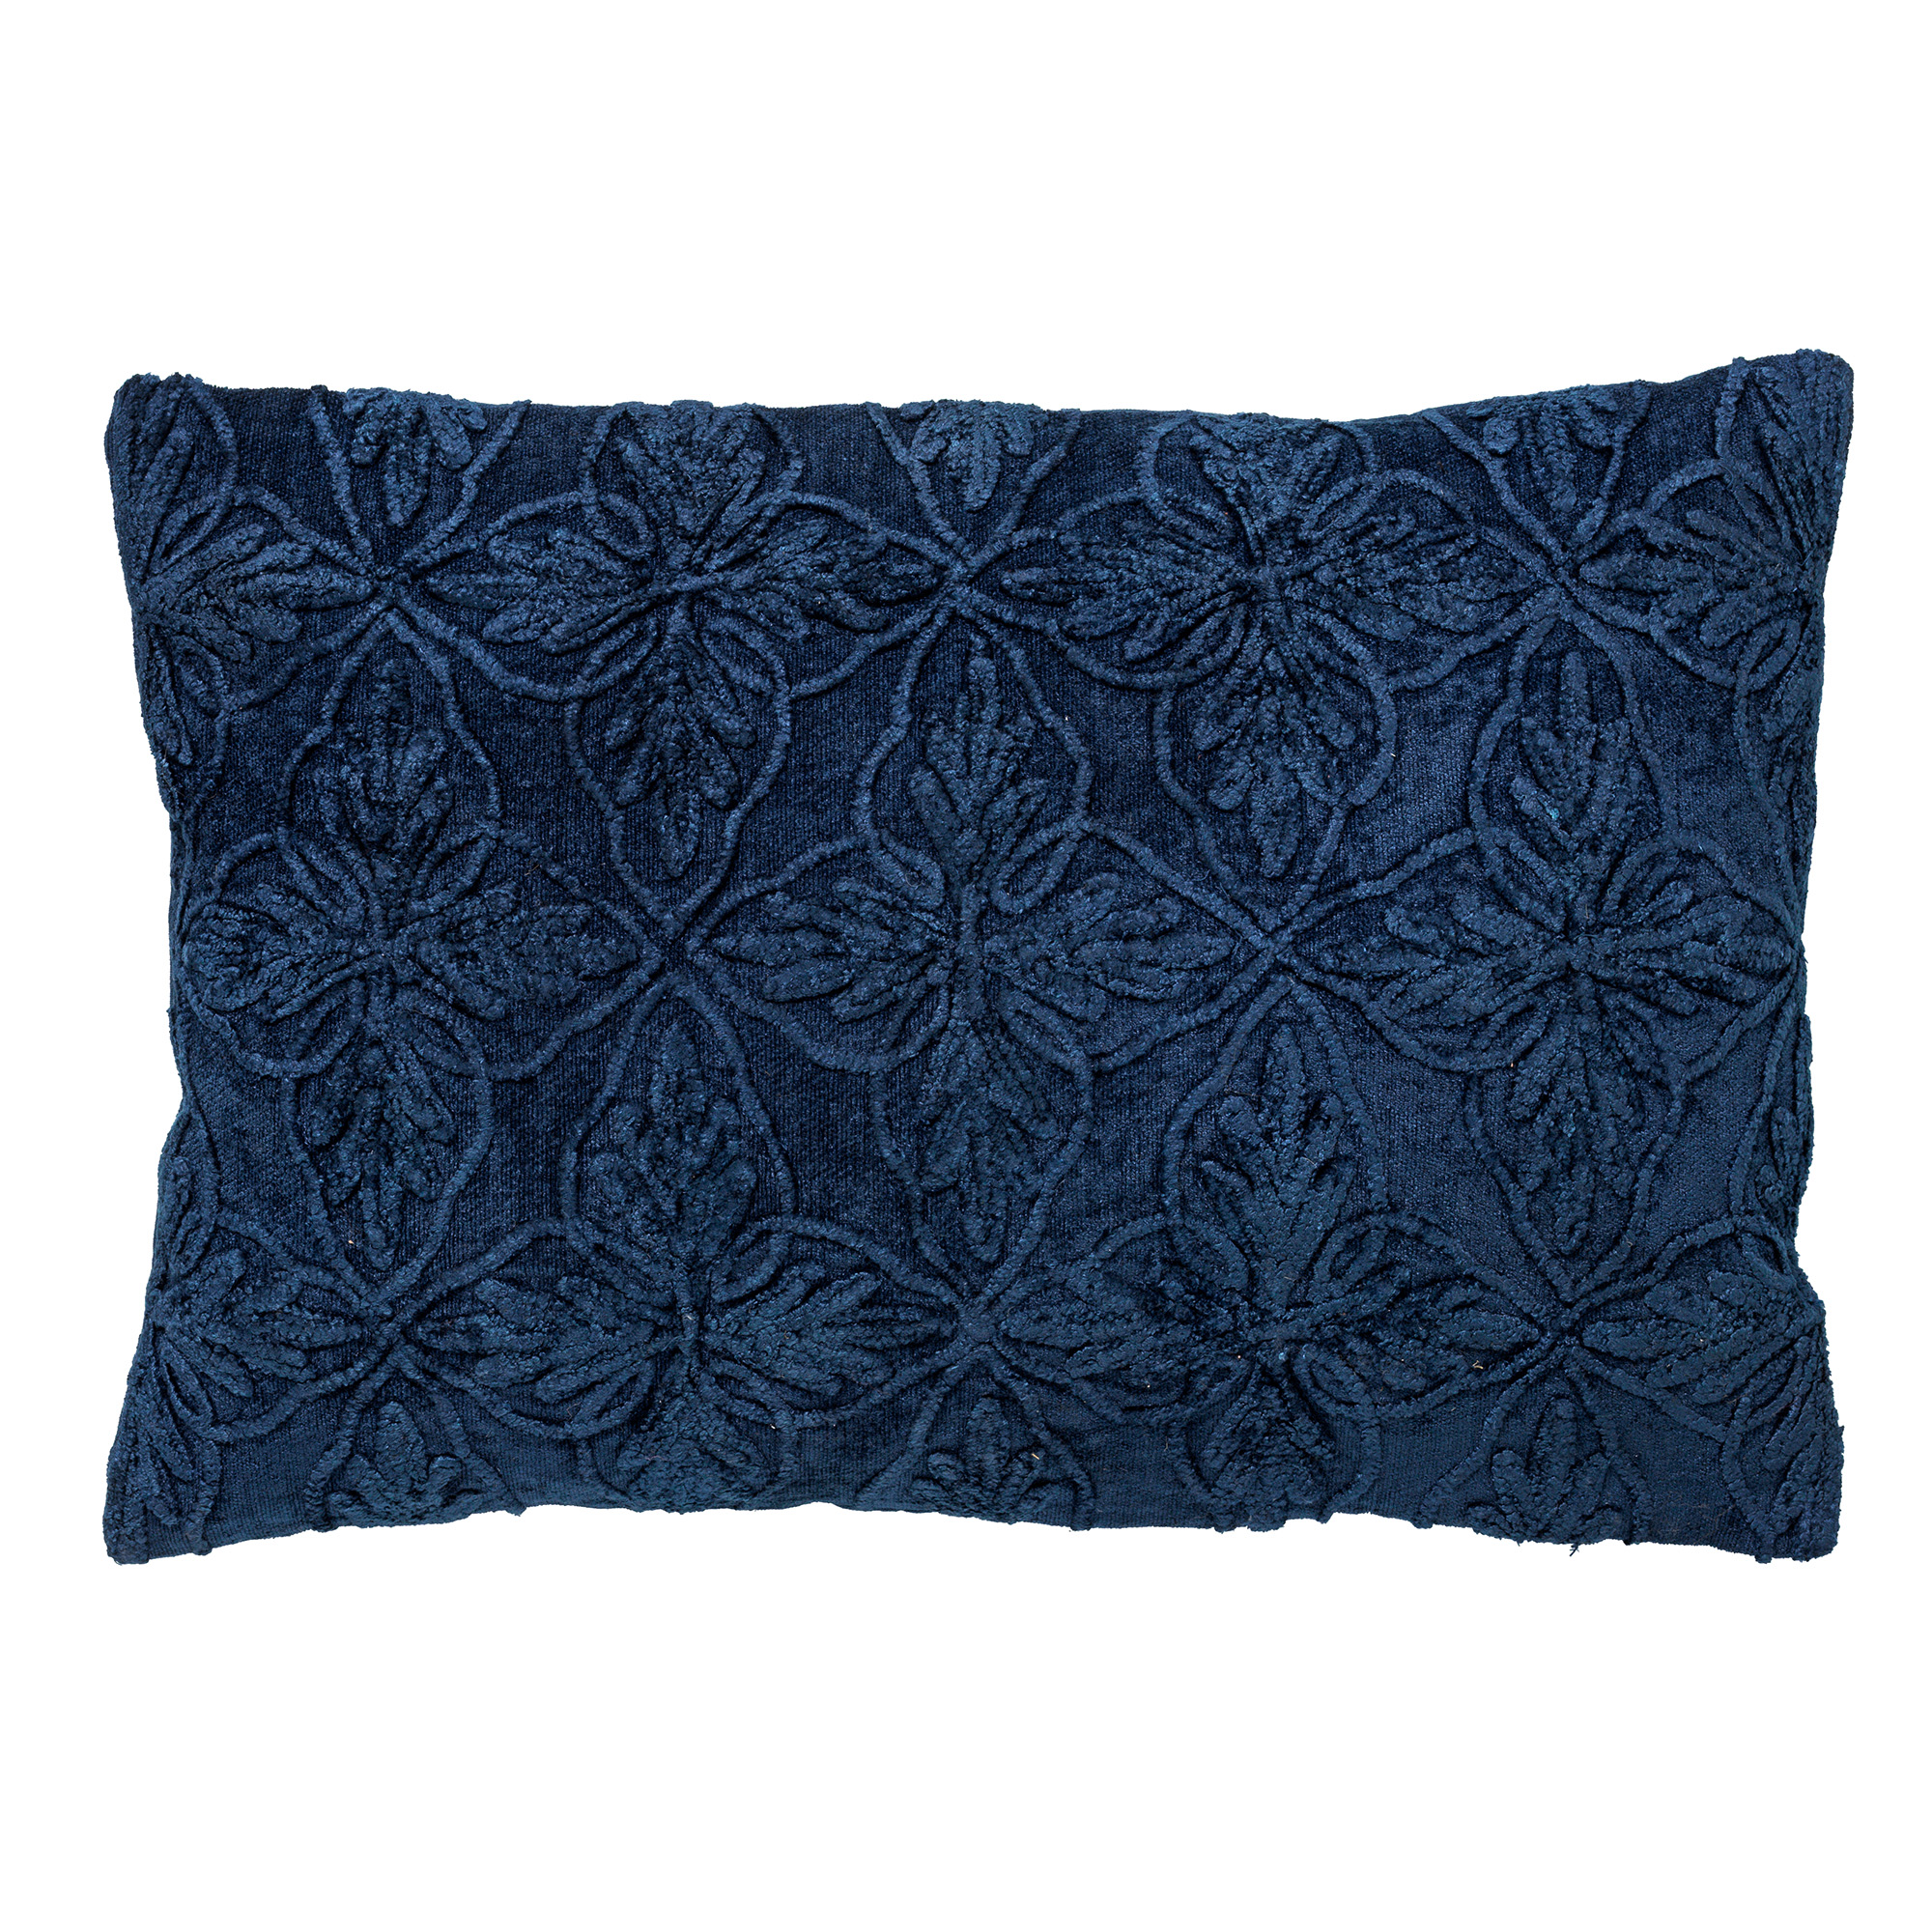 AMAR - Sierkussen 40x60 cm - 100% katoen - bloemen design - Insignia Blue - donkerblauw